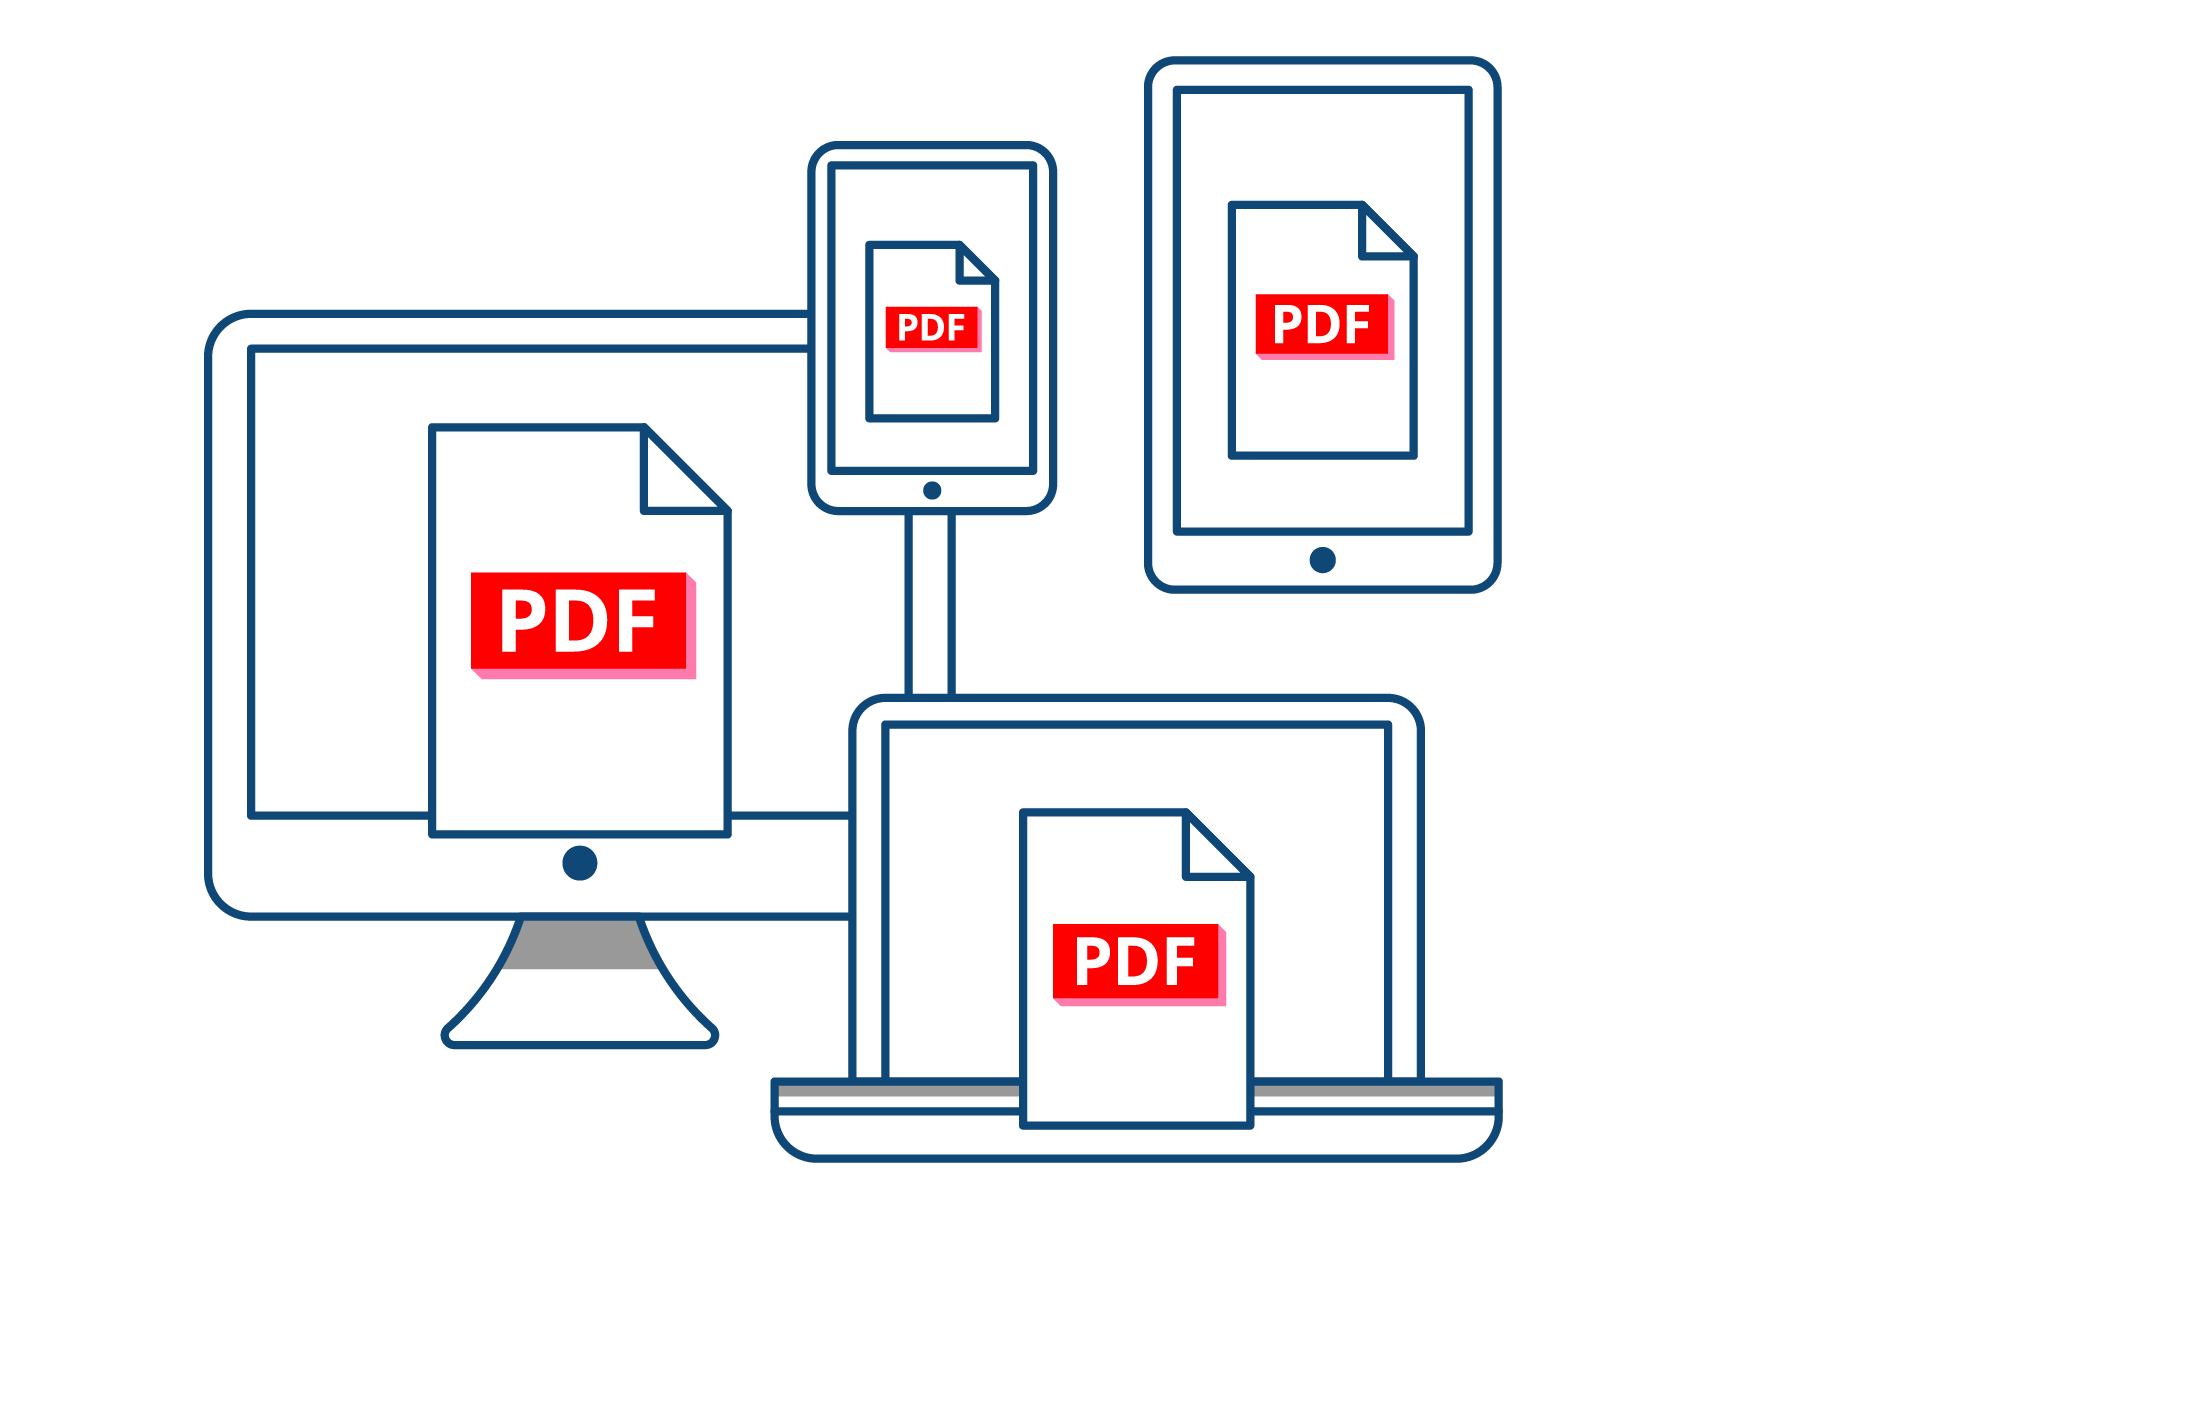 PDF tagged documents